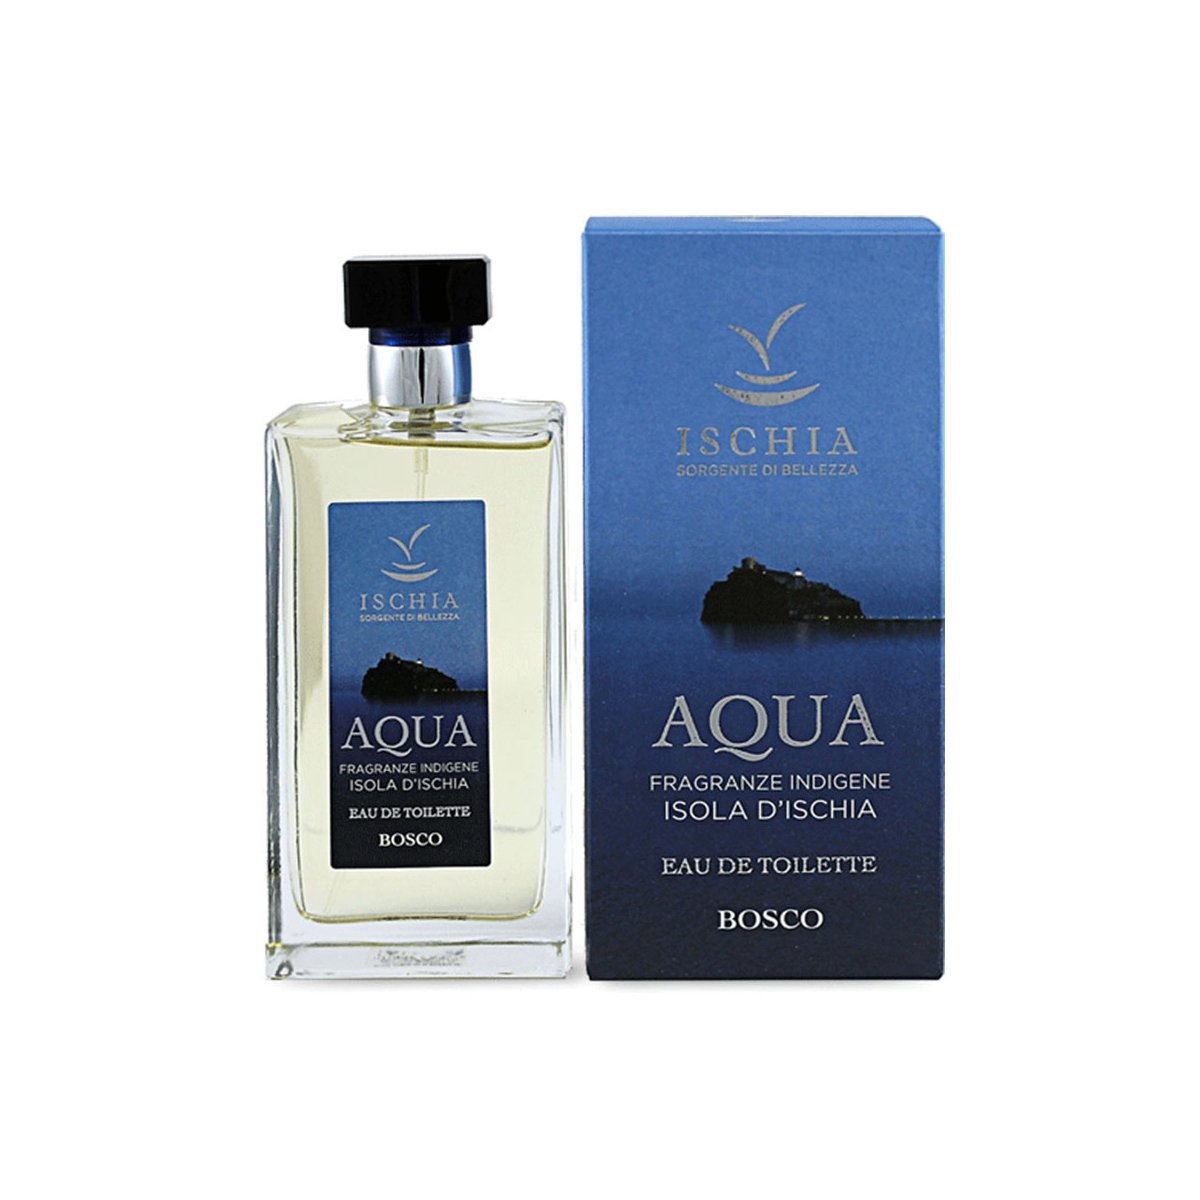 Eau de toilette "Aqua" Bosco - Ischia Sorgente di bellezza